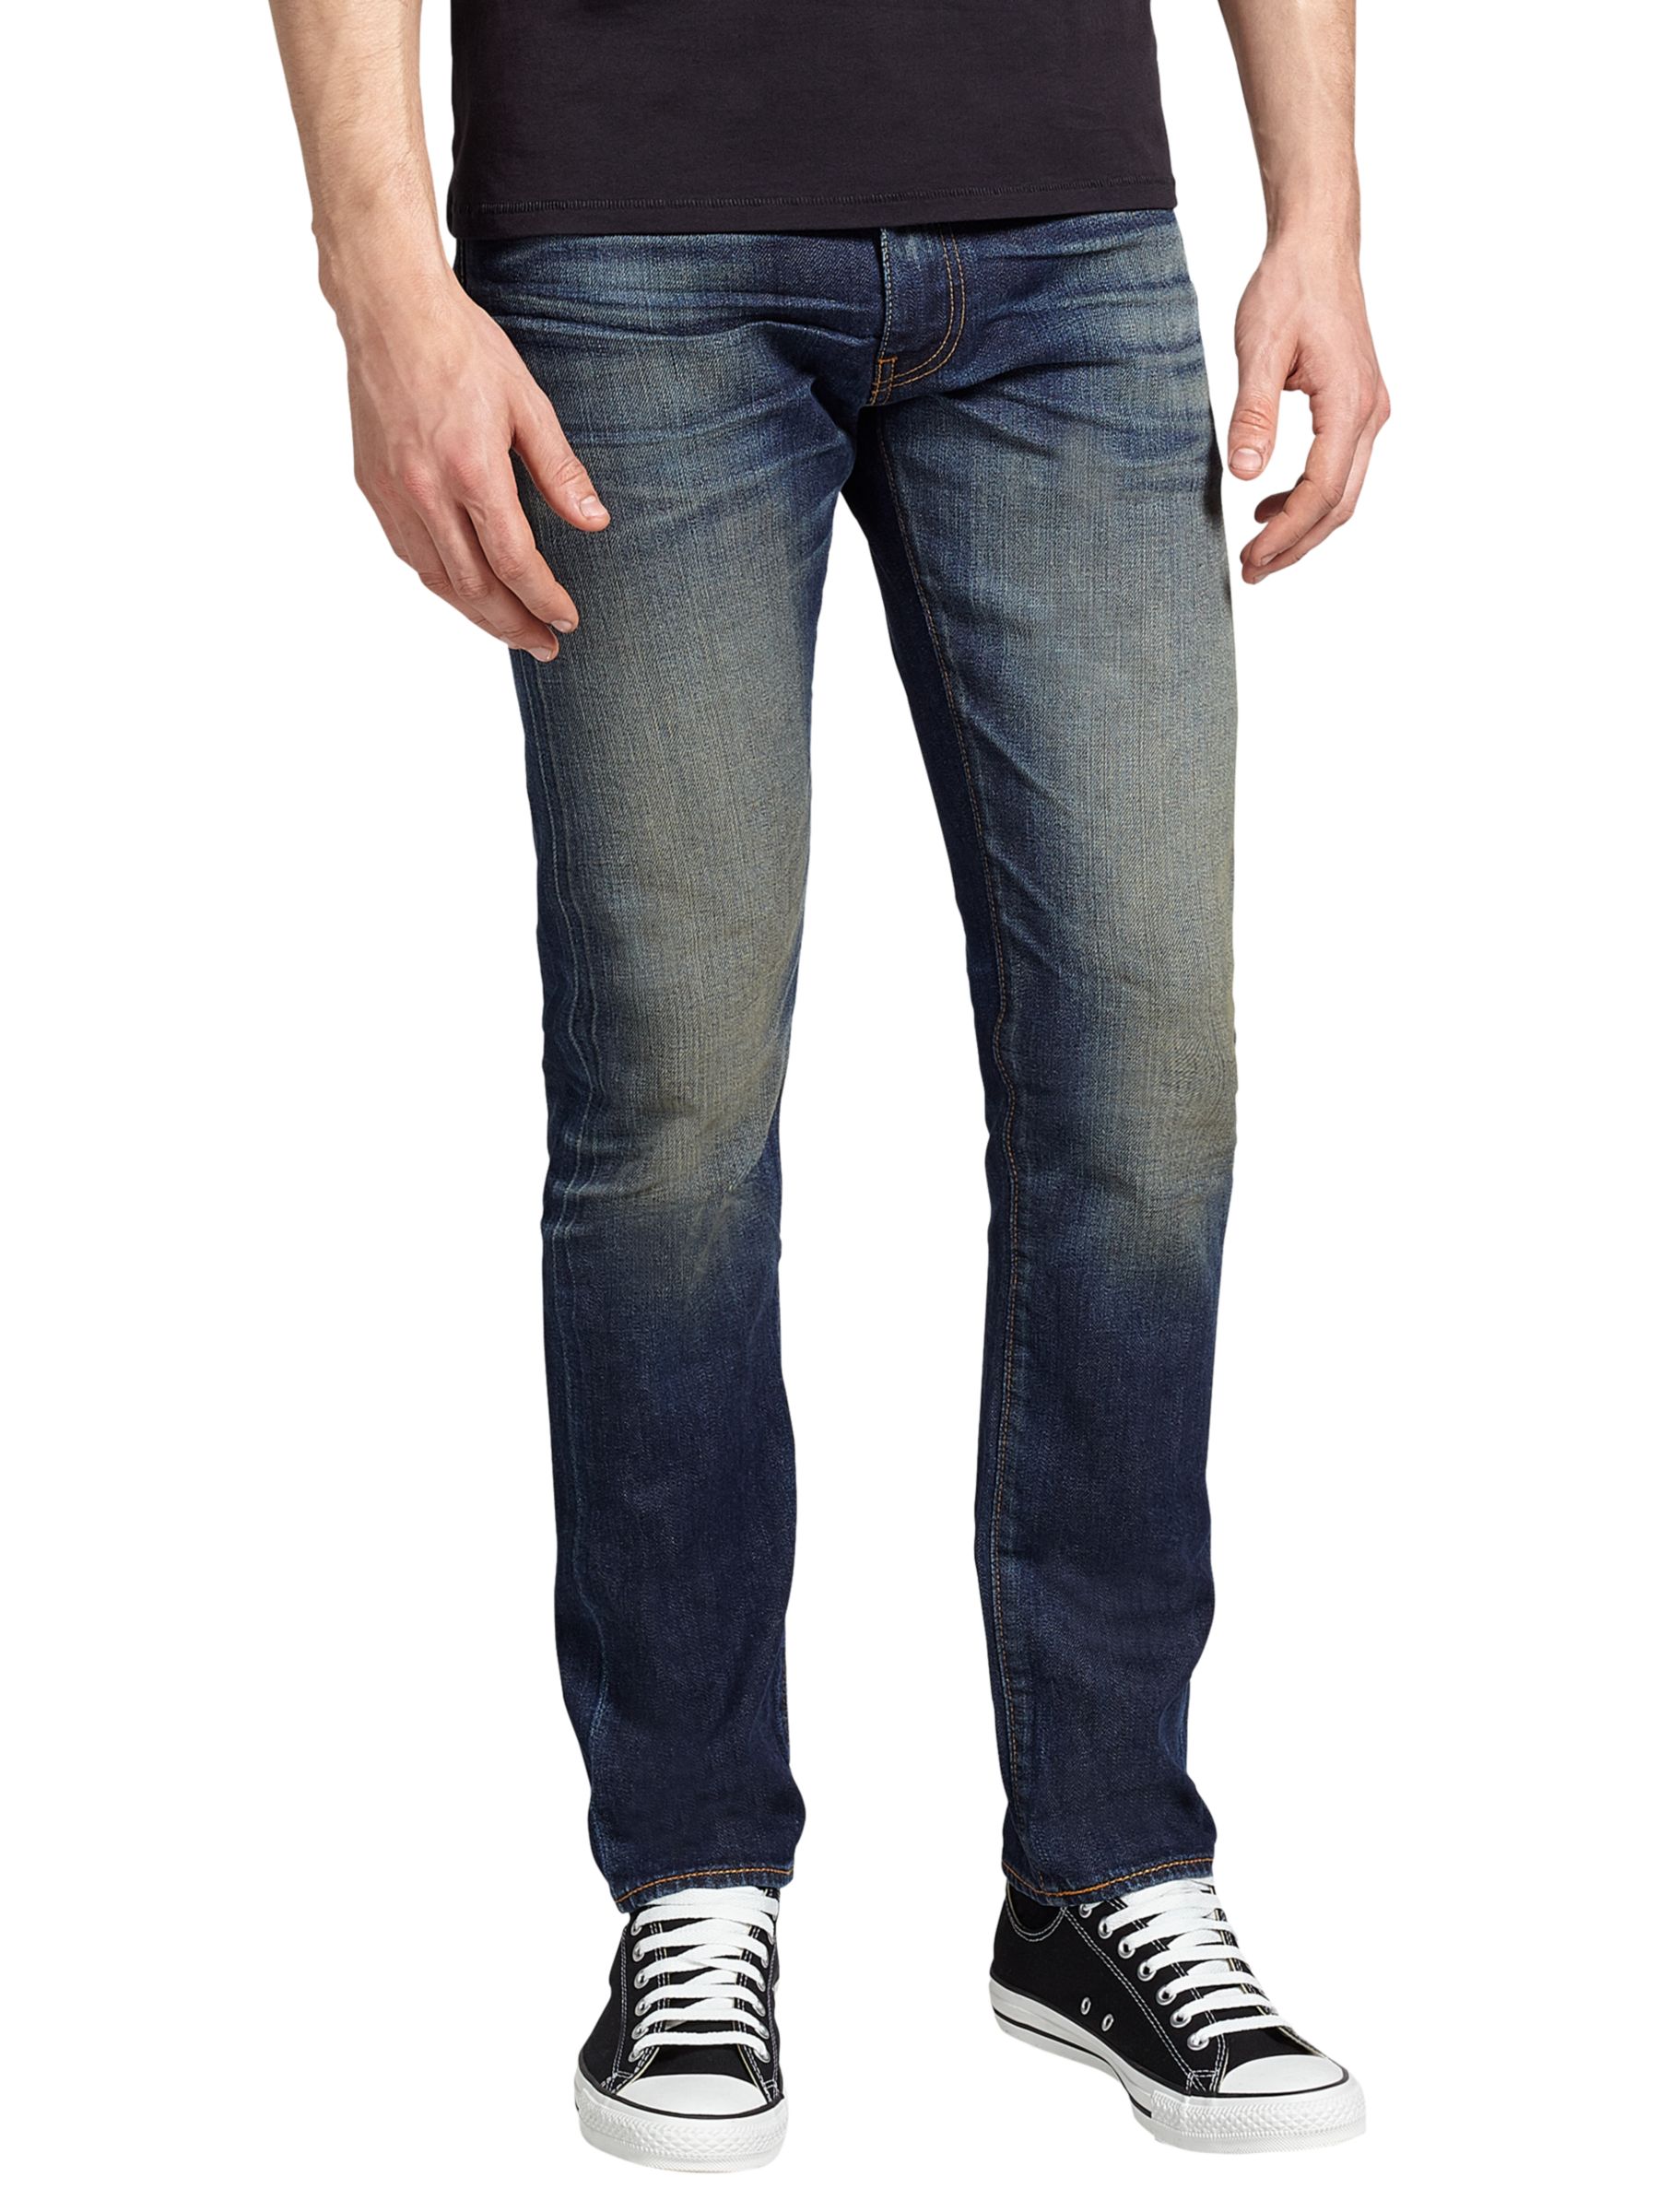 levi's 511 selvedge jeans